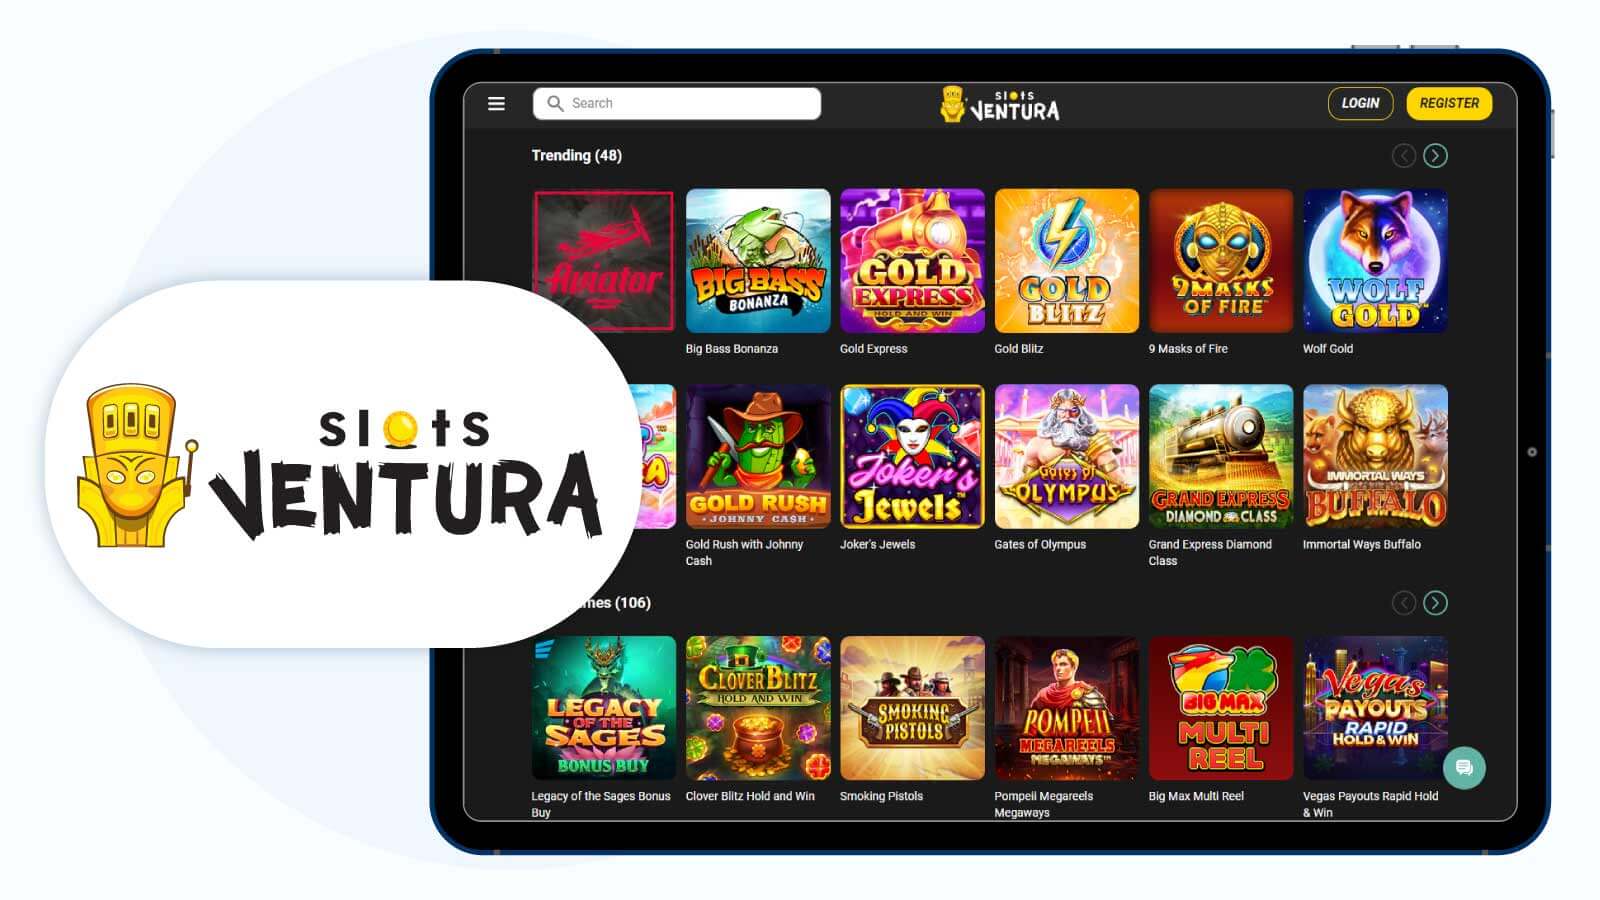 Slots Ventura Casino Top New Casino with €5 Minimum Deposit Available